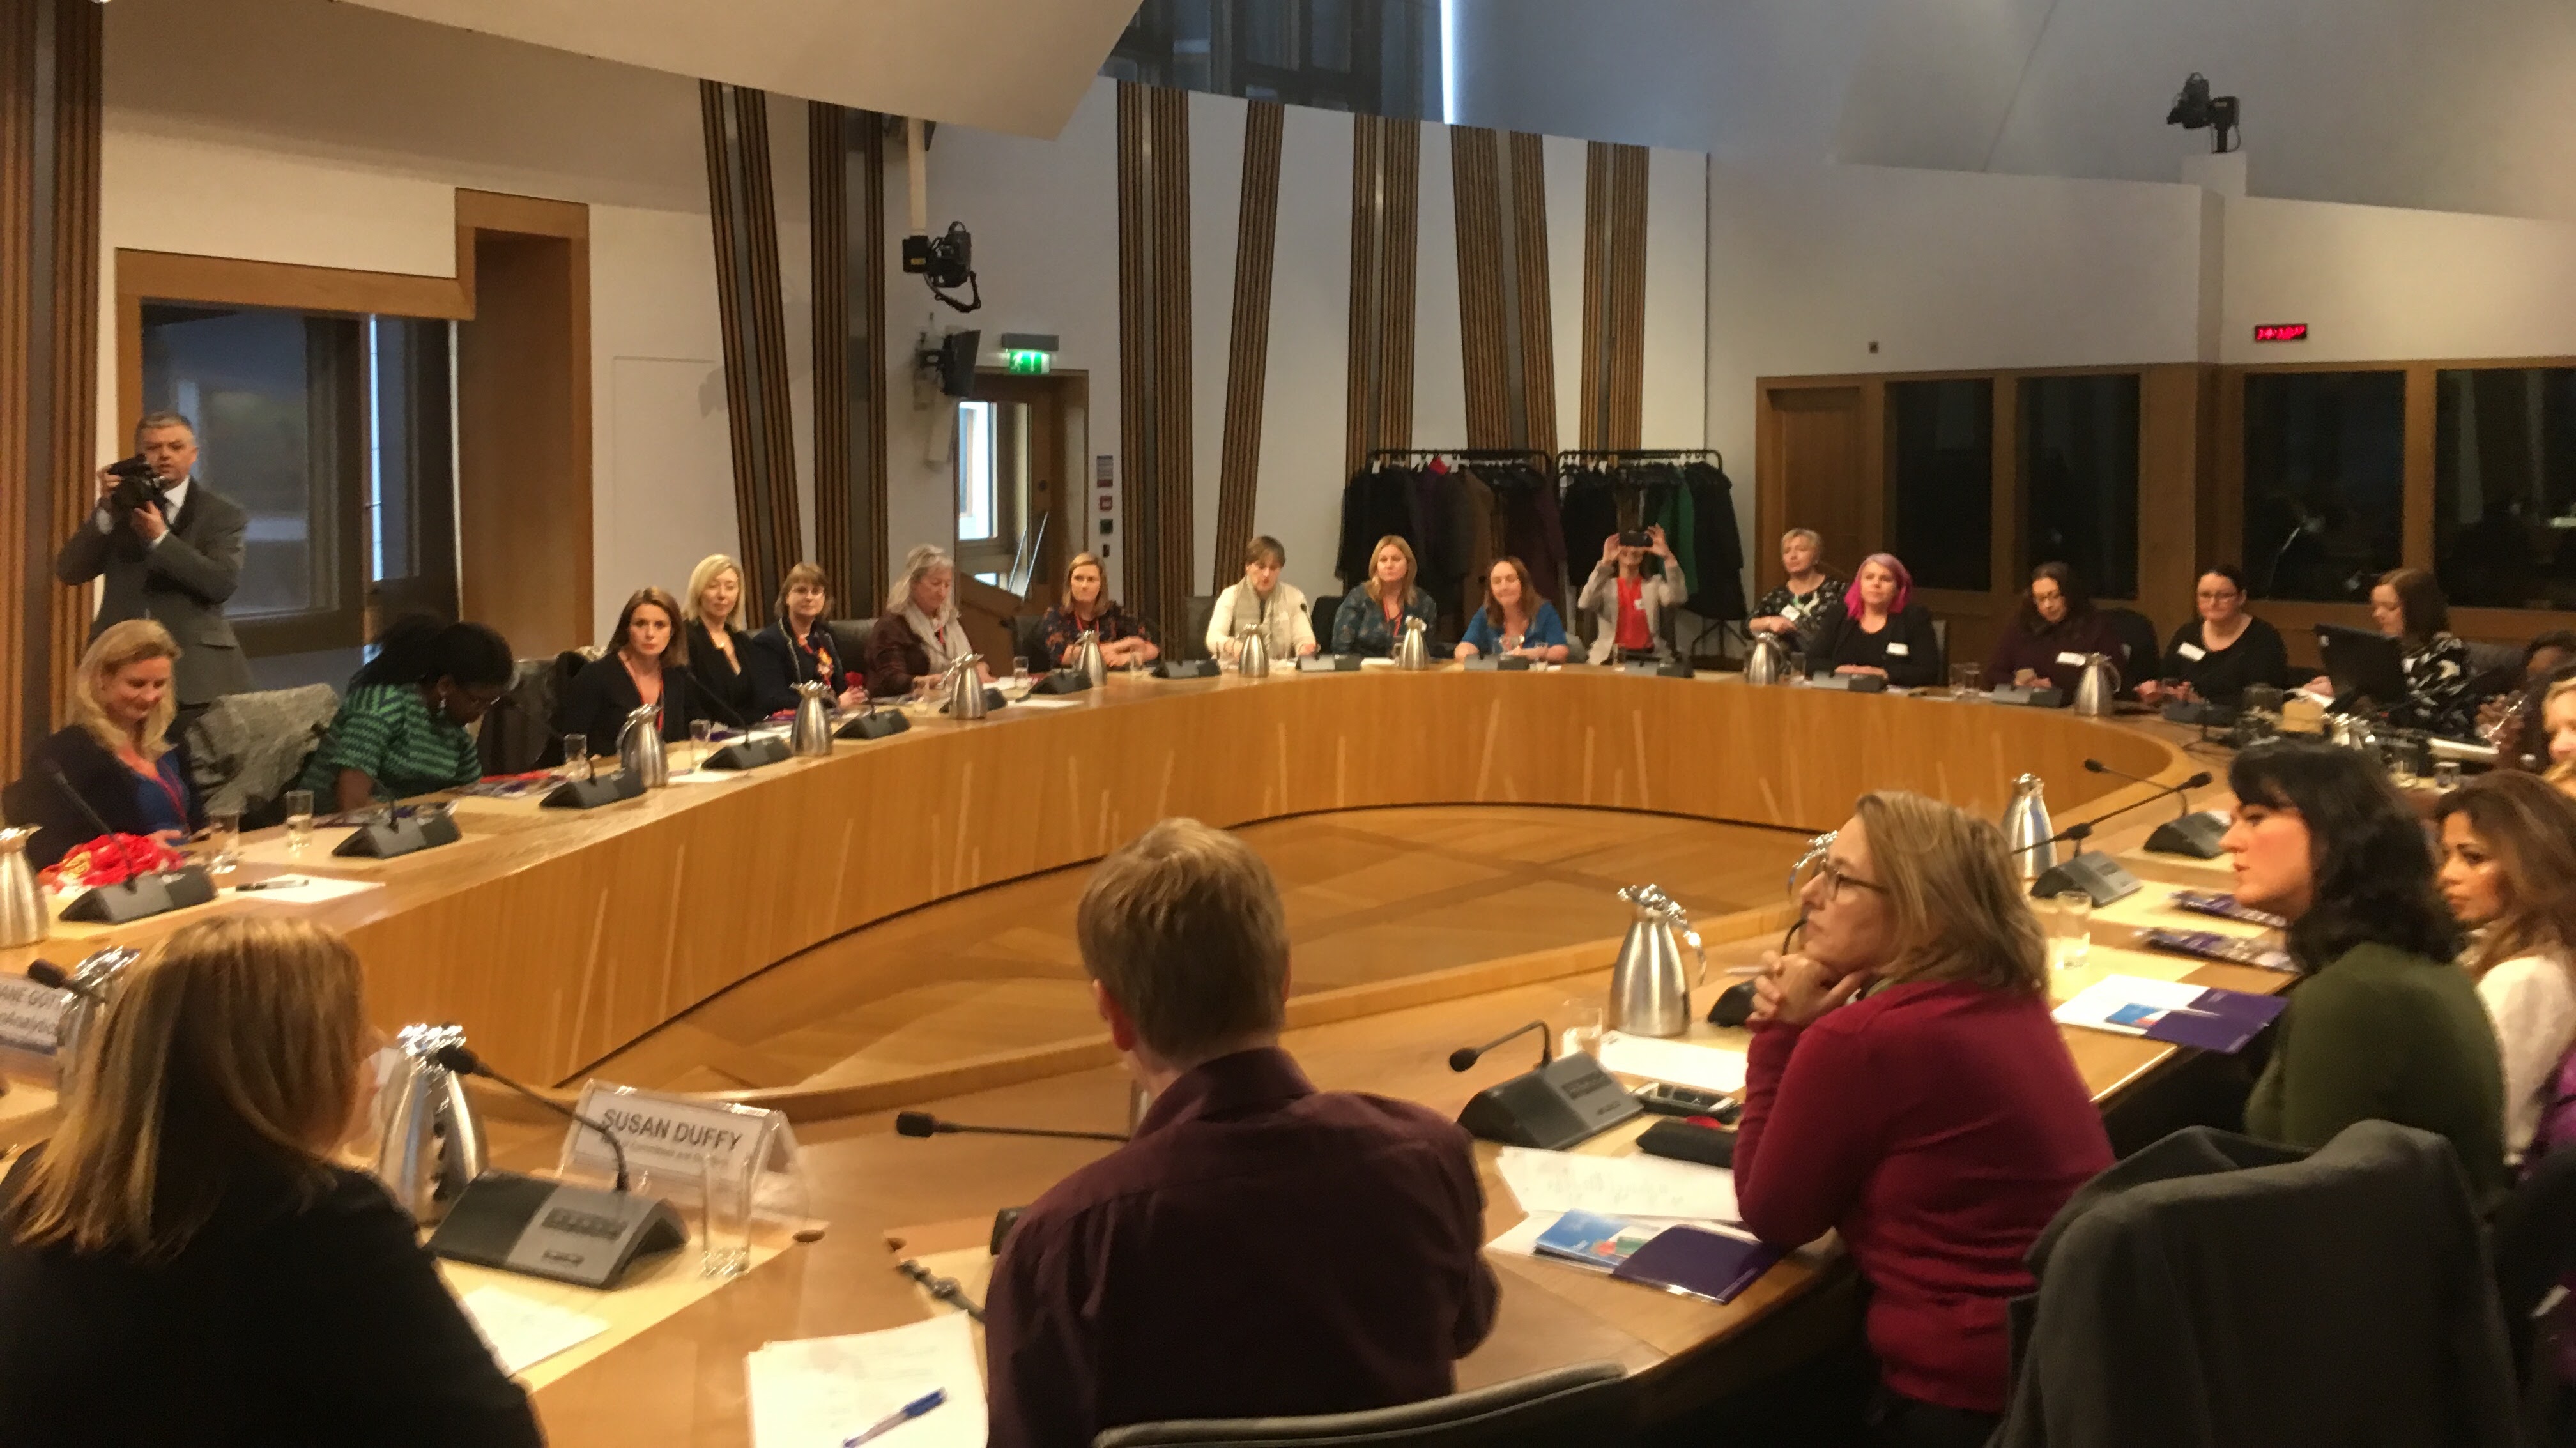 Training session with Women's Enterprise Scotland ambassadors.